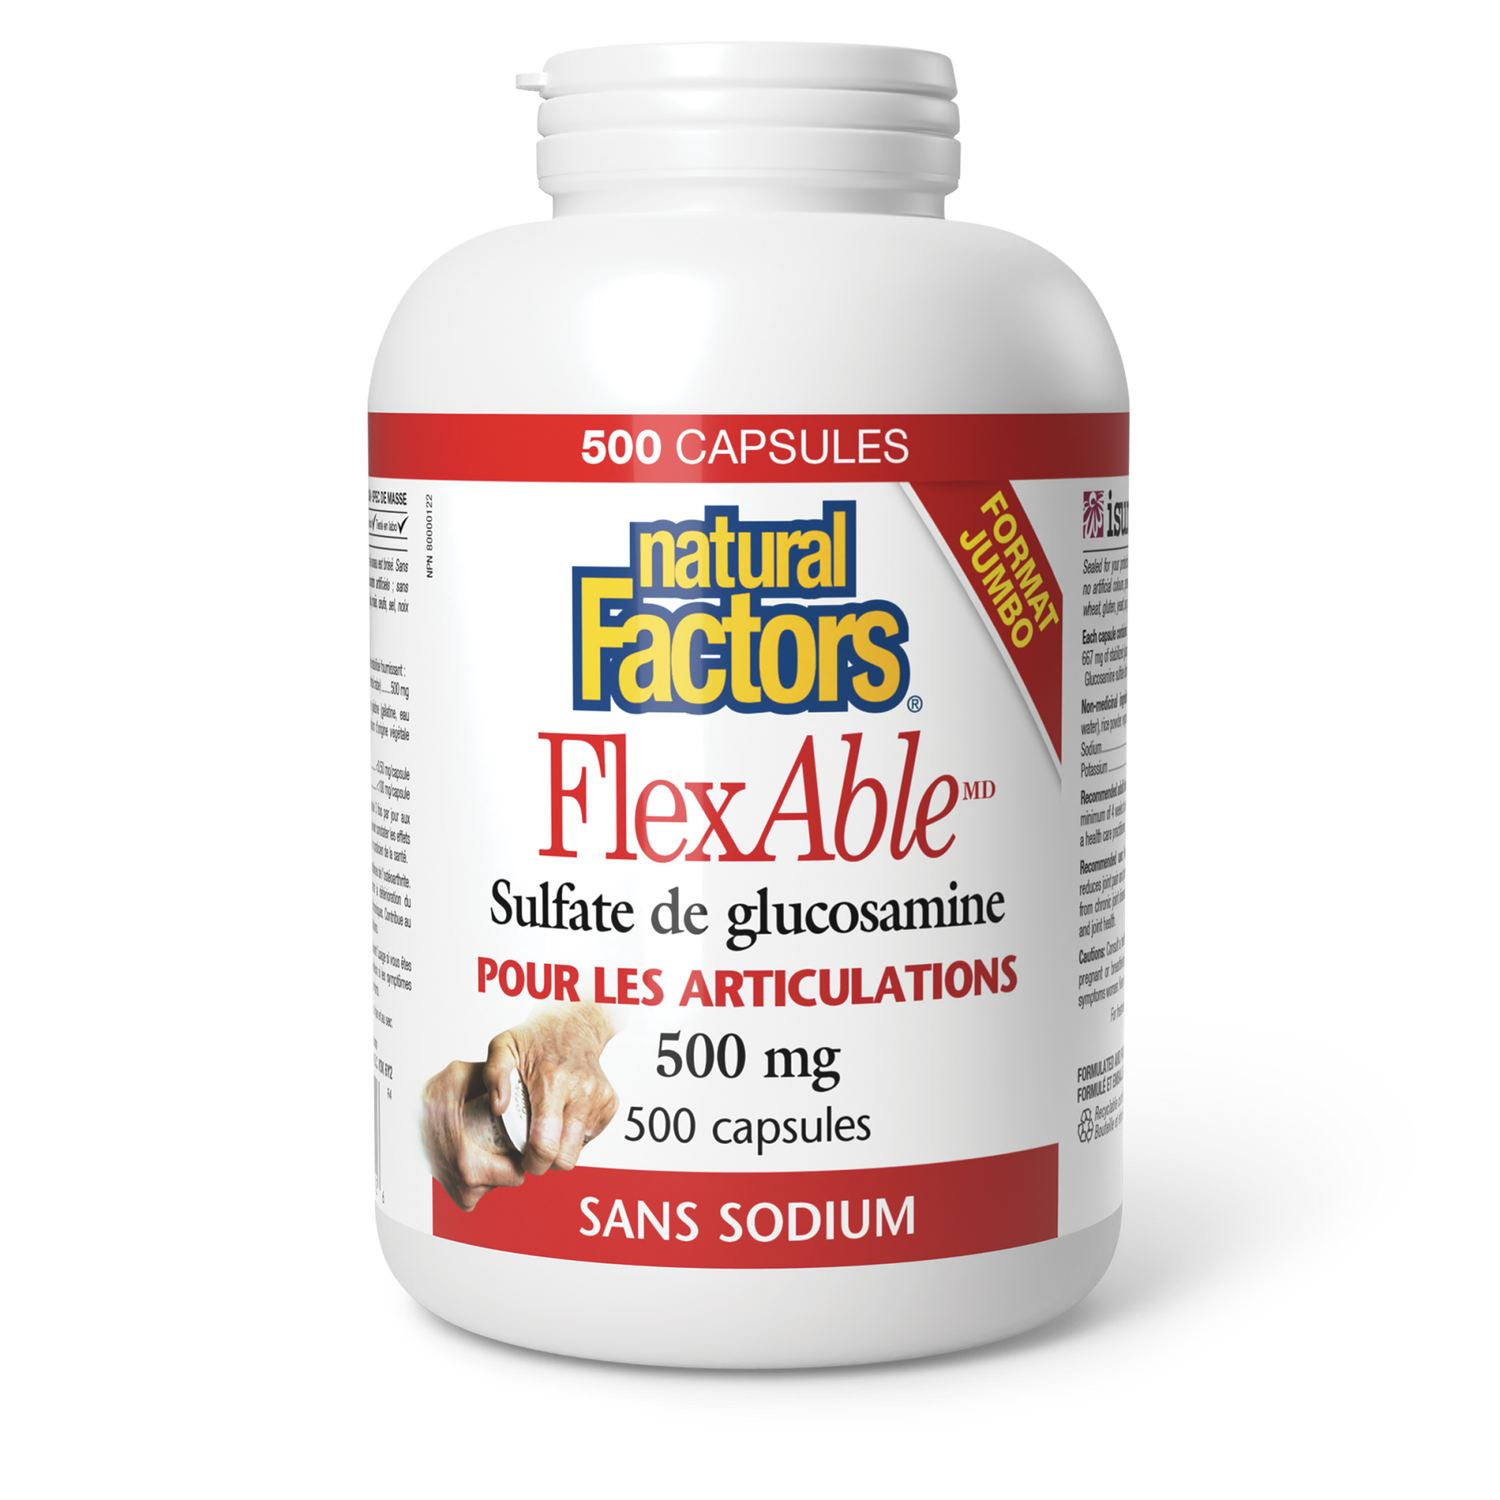 FlexAble Sulfate de glucosamine 500 mg, Natural Factors|v|image|26592